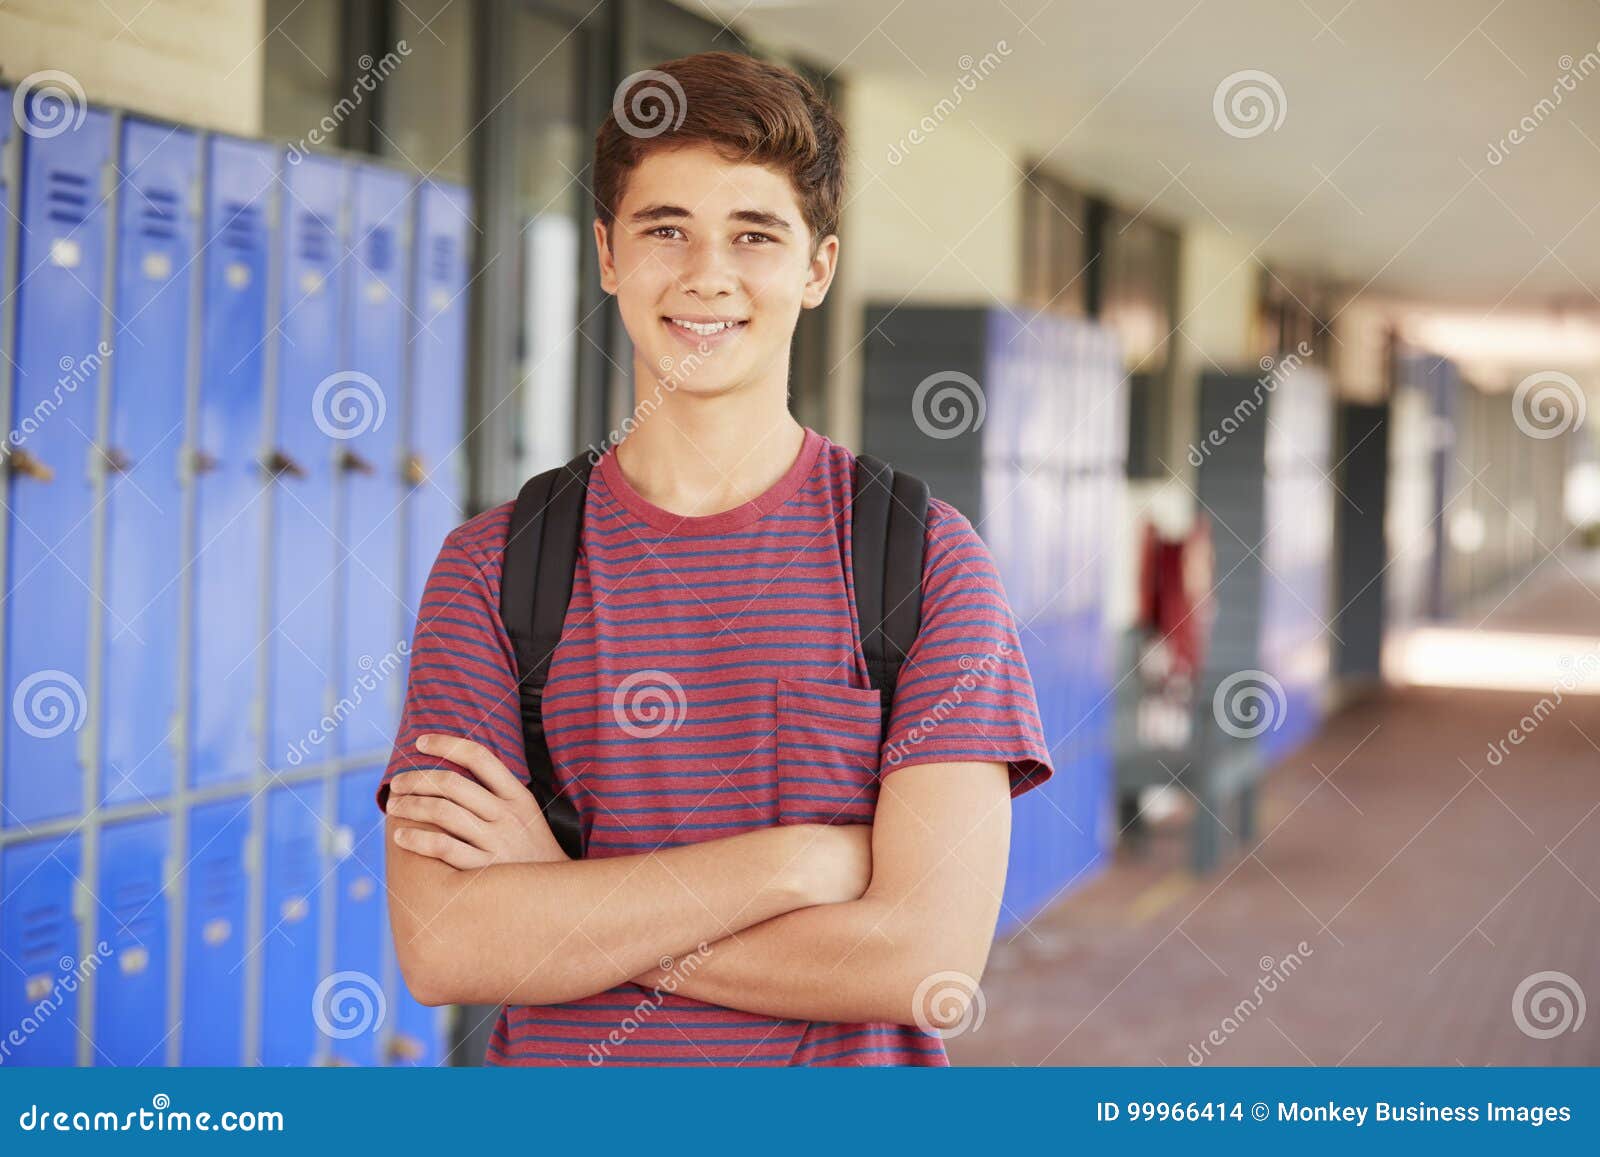 High School Teen